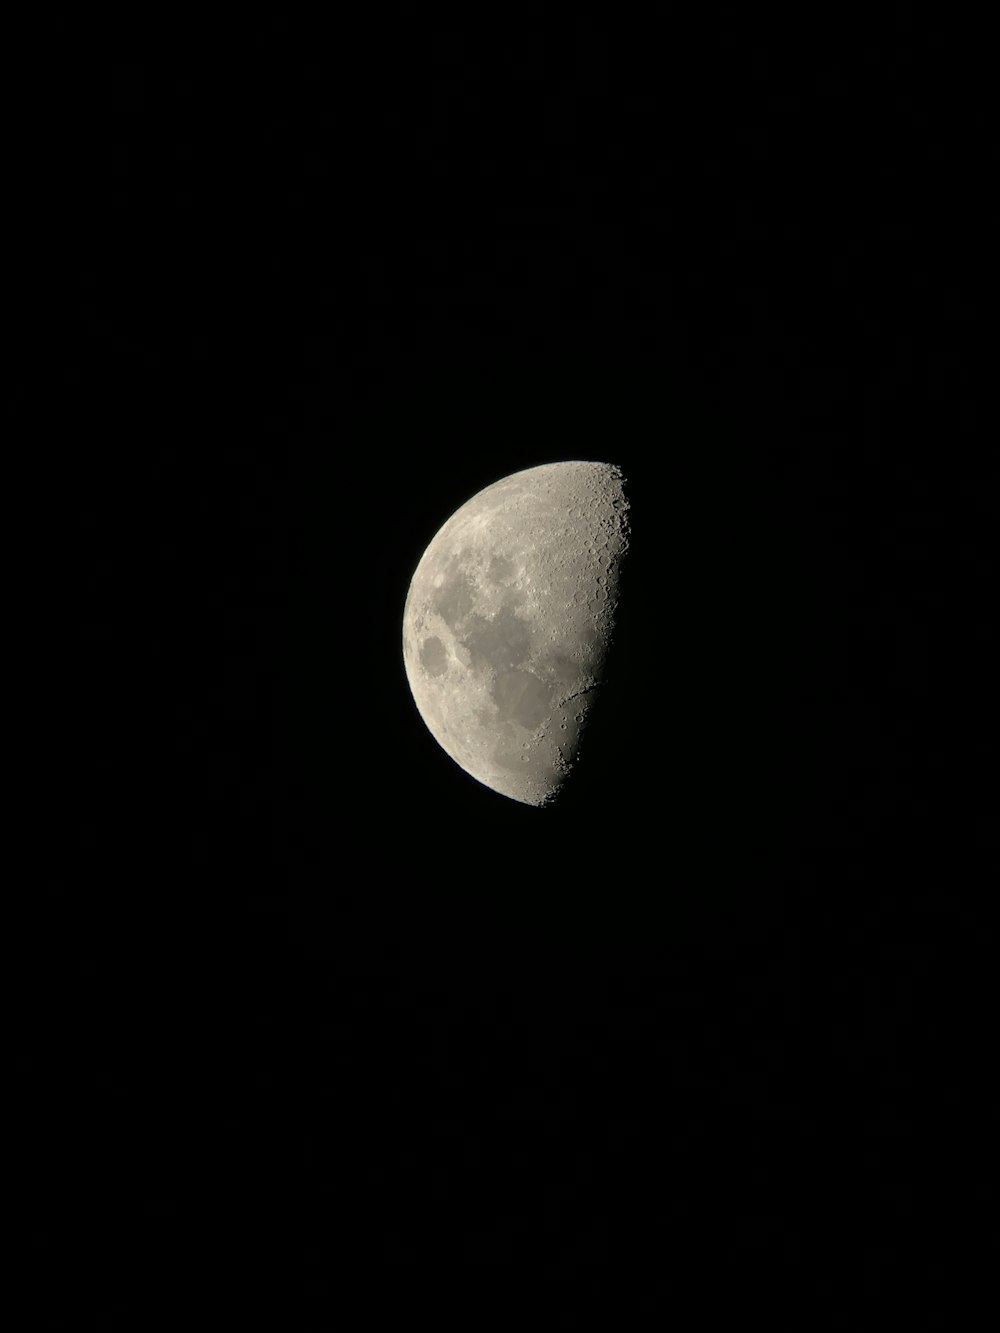 a half moon is seen in the dark sky